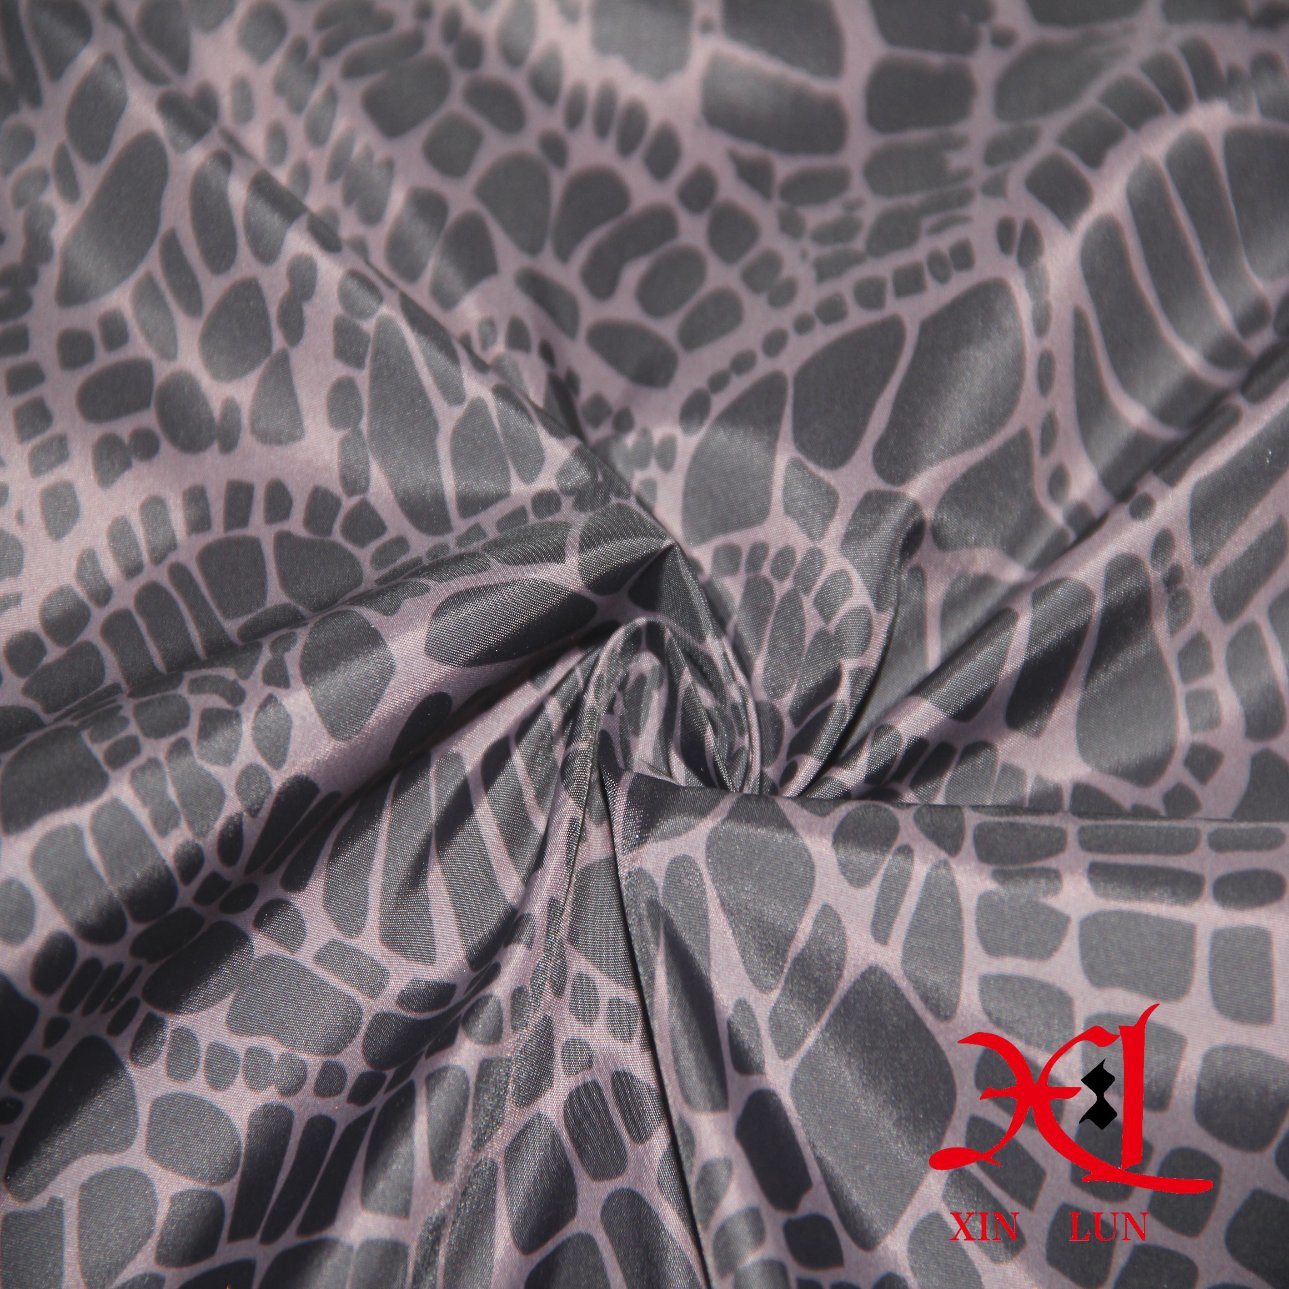 High Density Print Polyester Waterproof Fabric for Jacket/Windbreaker